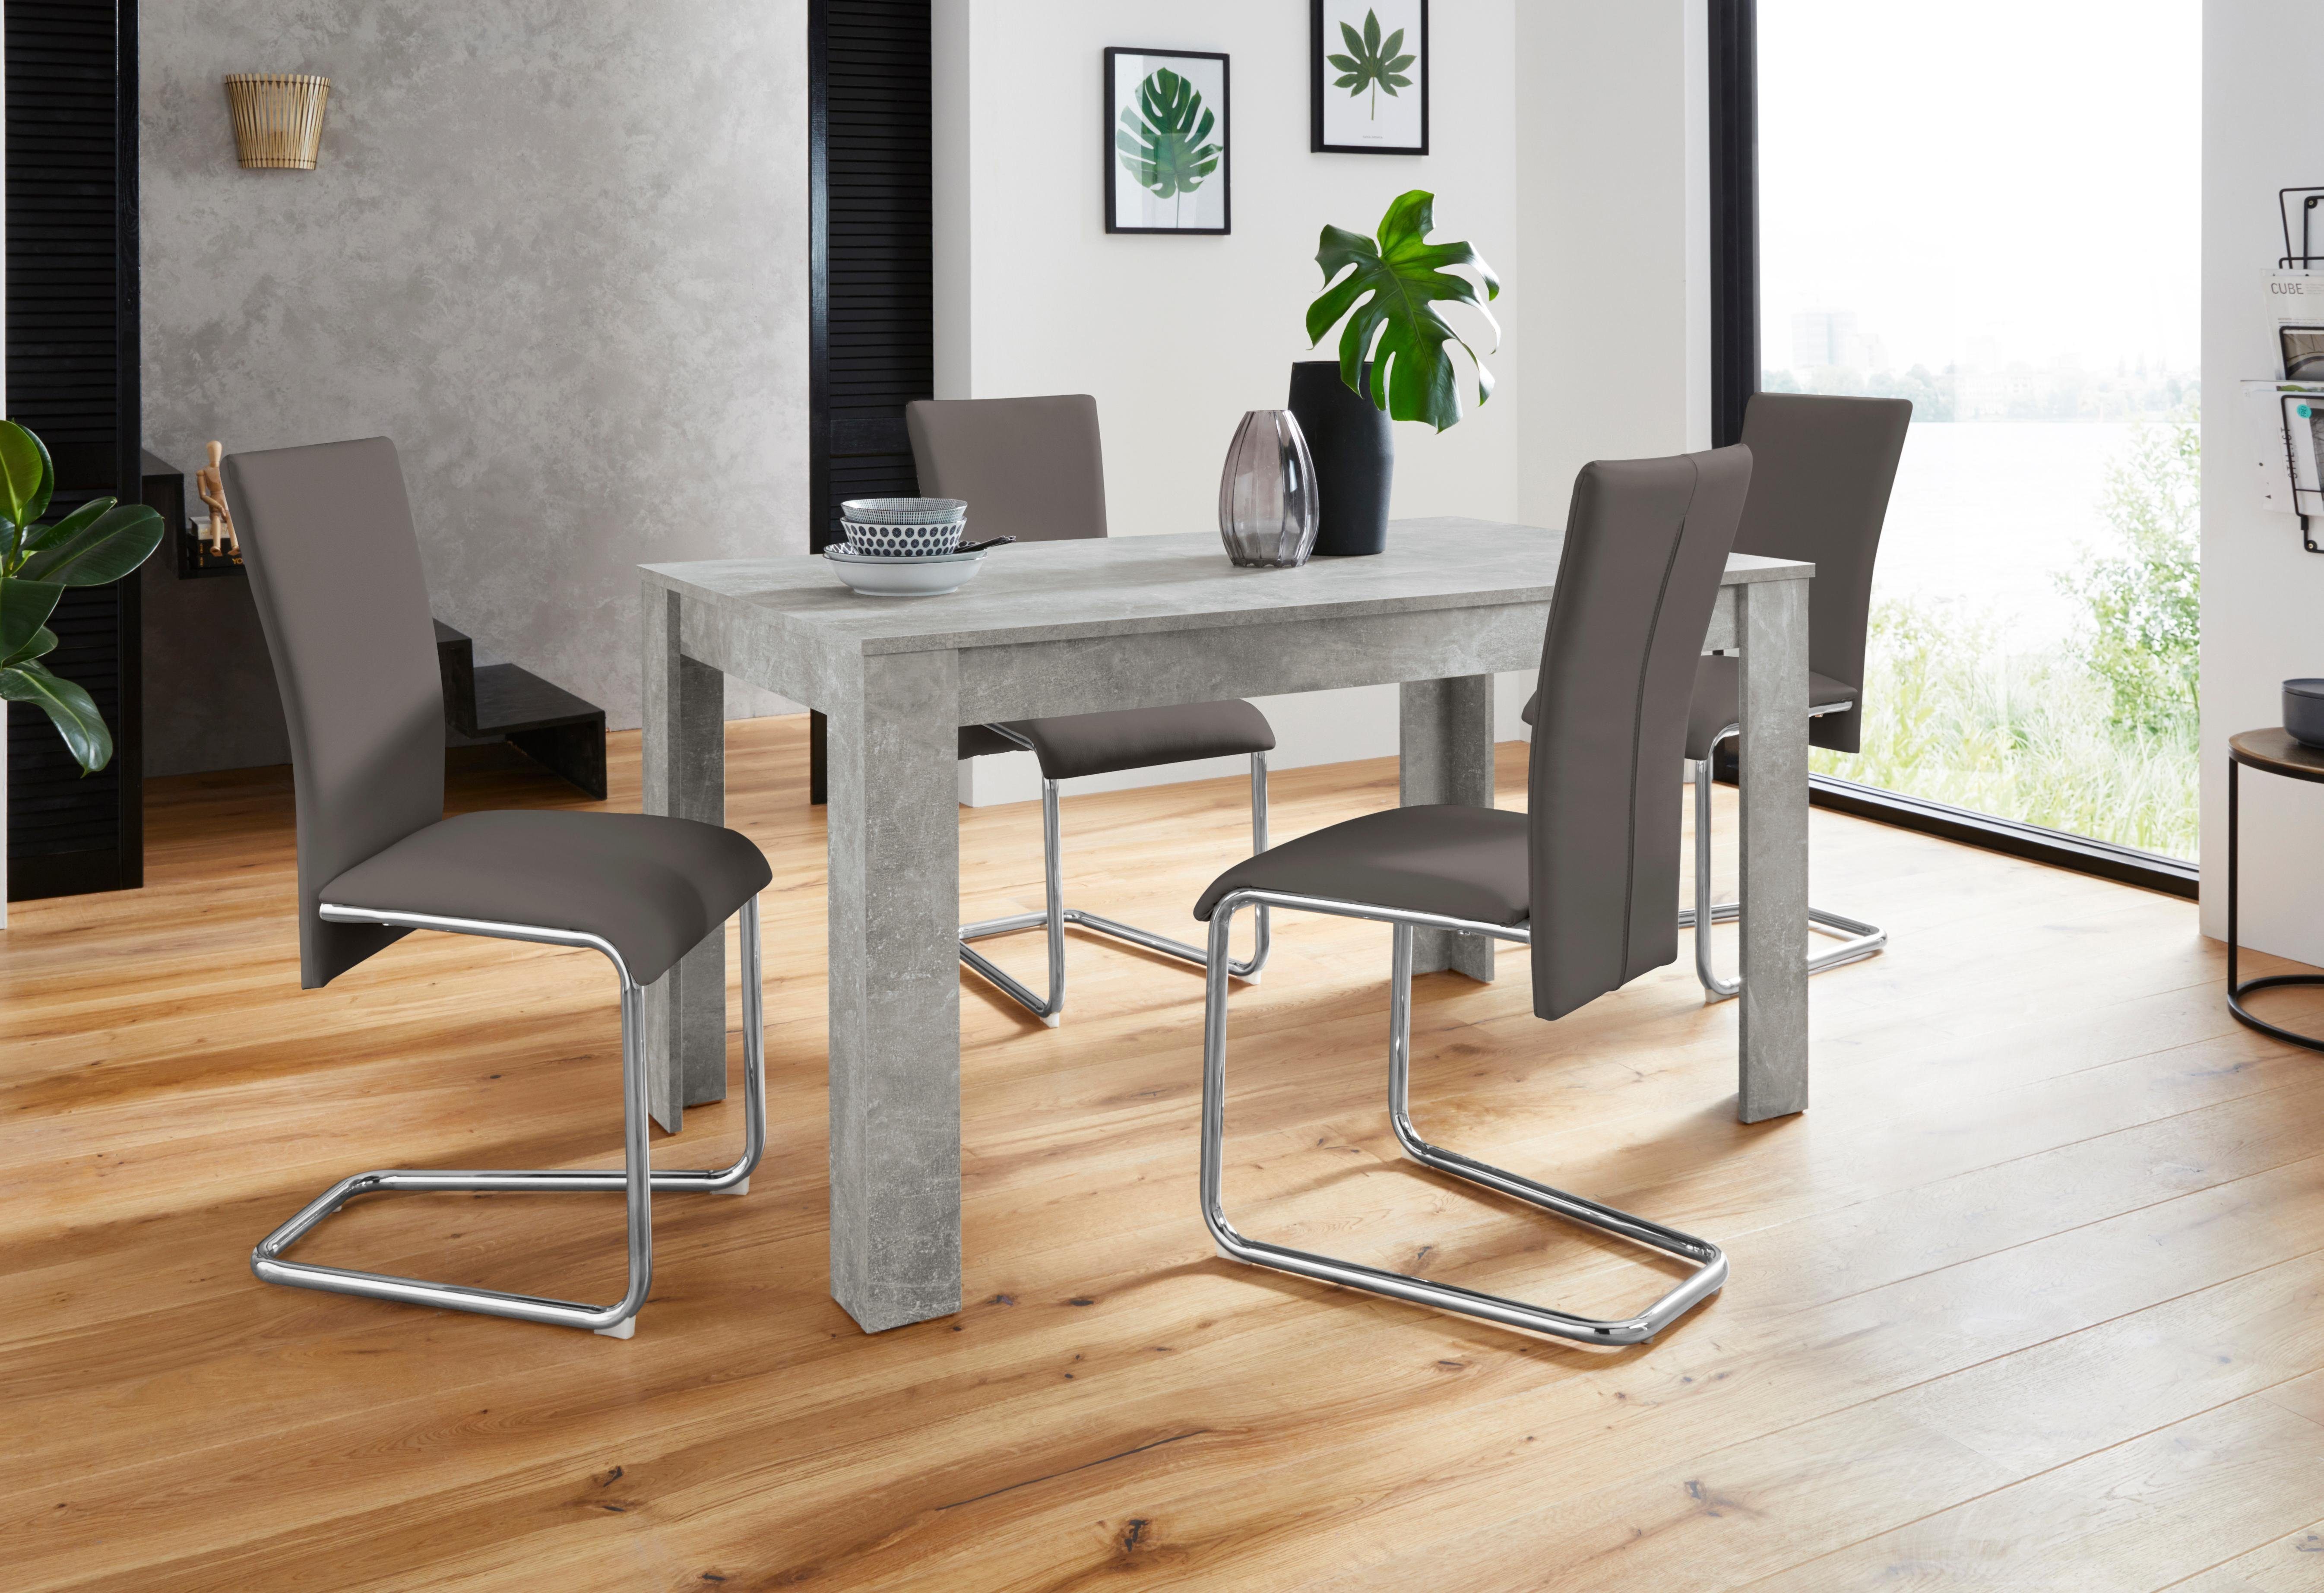 Homexperts Eethoek Nick3-Mulan met 4 stoelen, tafel in beton-look, breedte 140 cm (set, 5-delig - 5-delig)